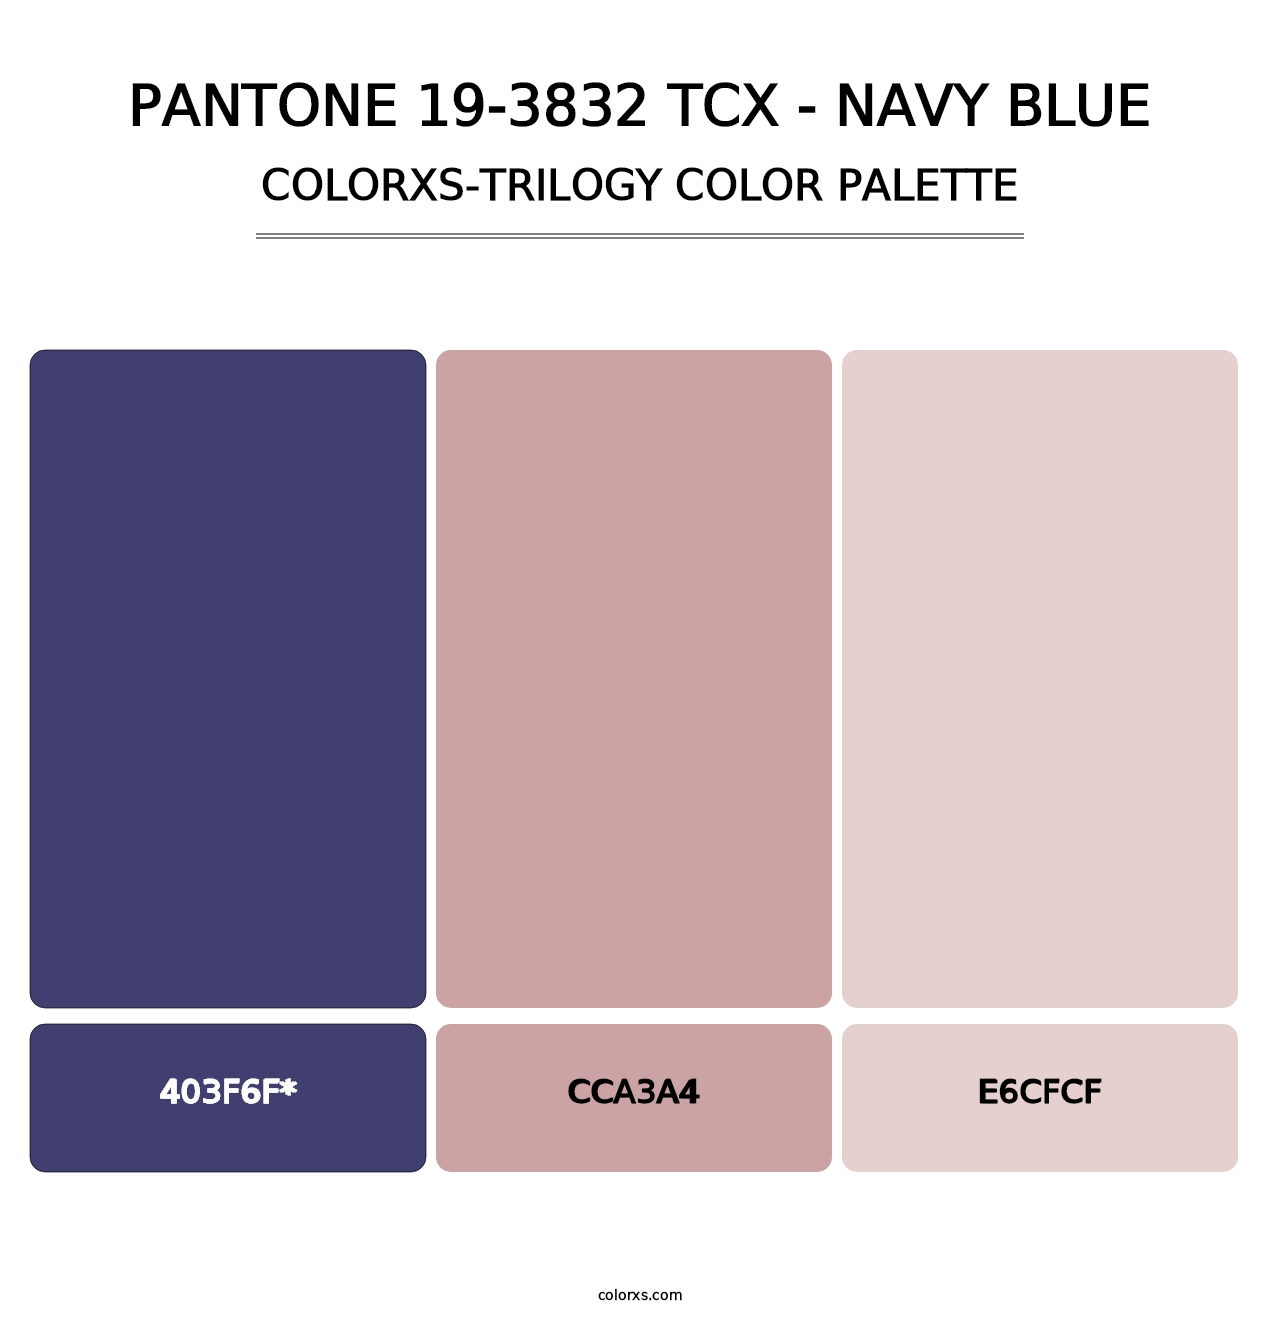 PANTONE 19-3832 TCX - Navy Blue - Colorxs Trilogy Palette